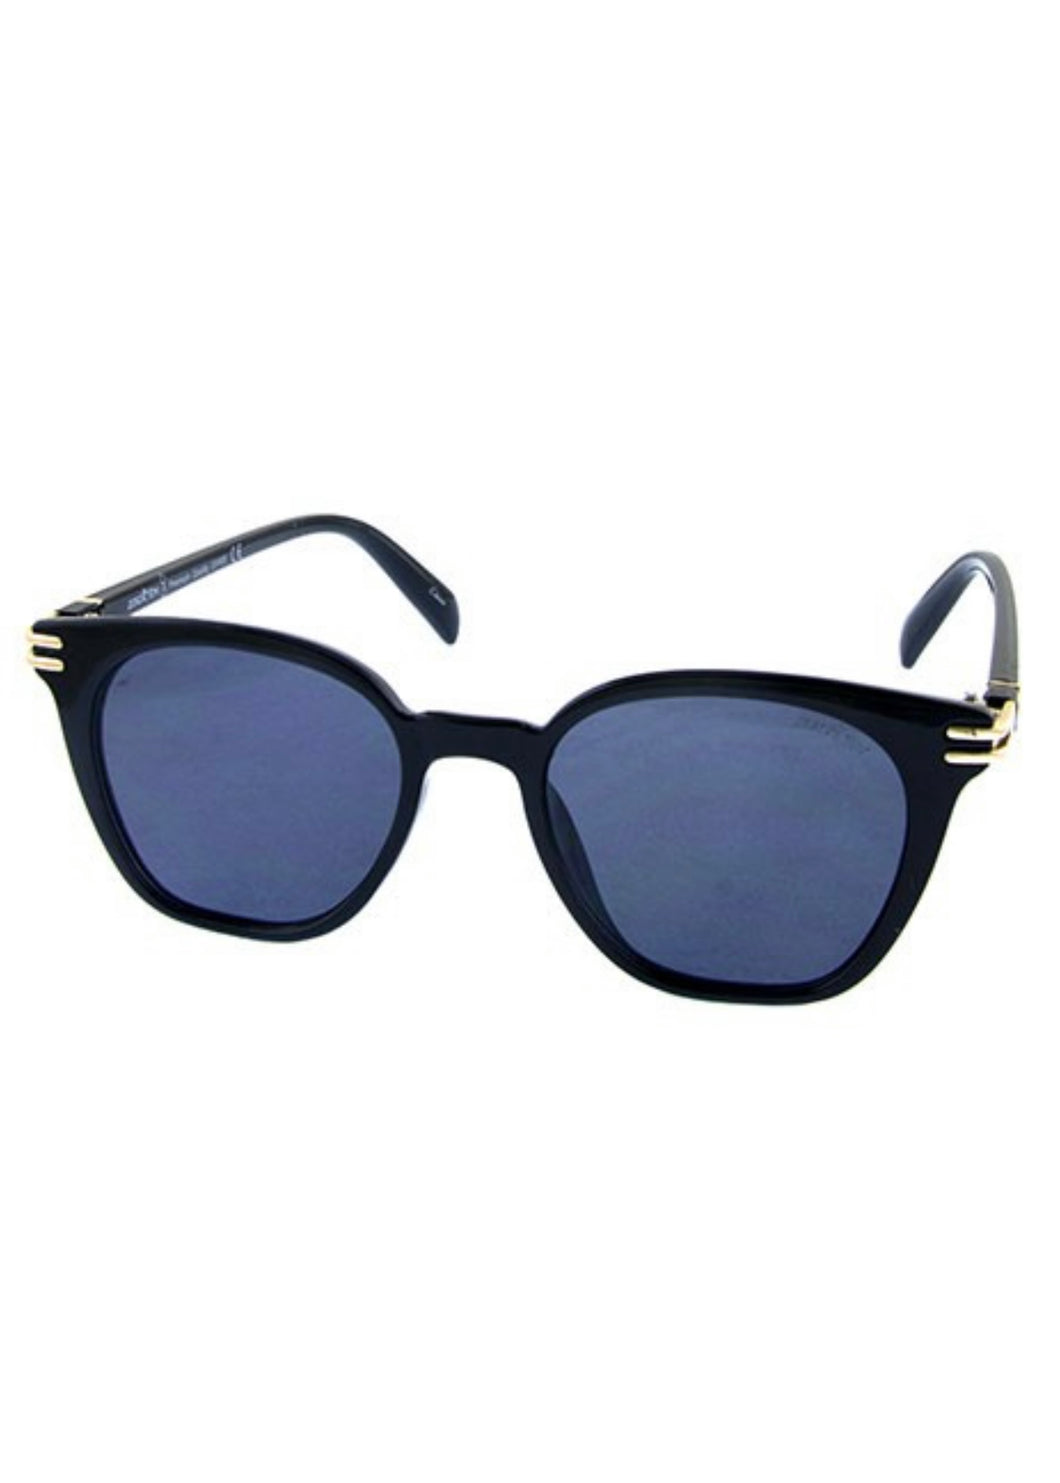 Pop Style Black Sunglasses